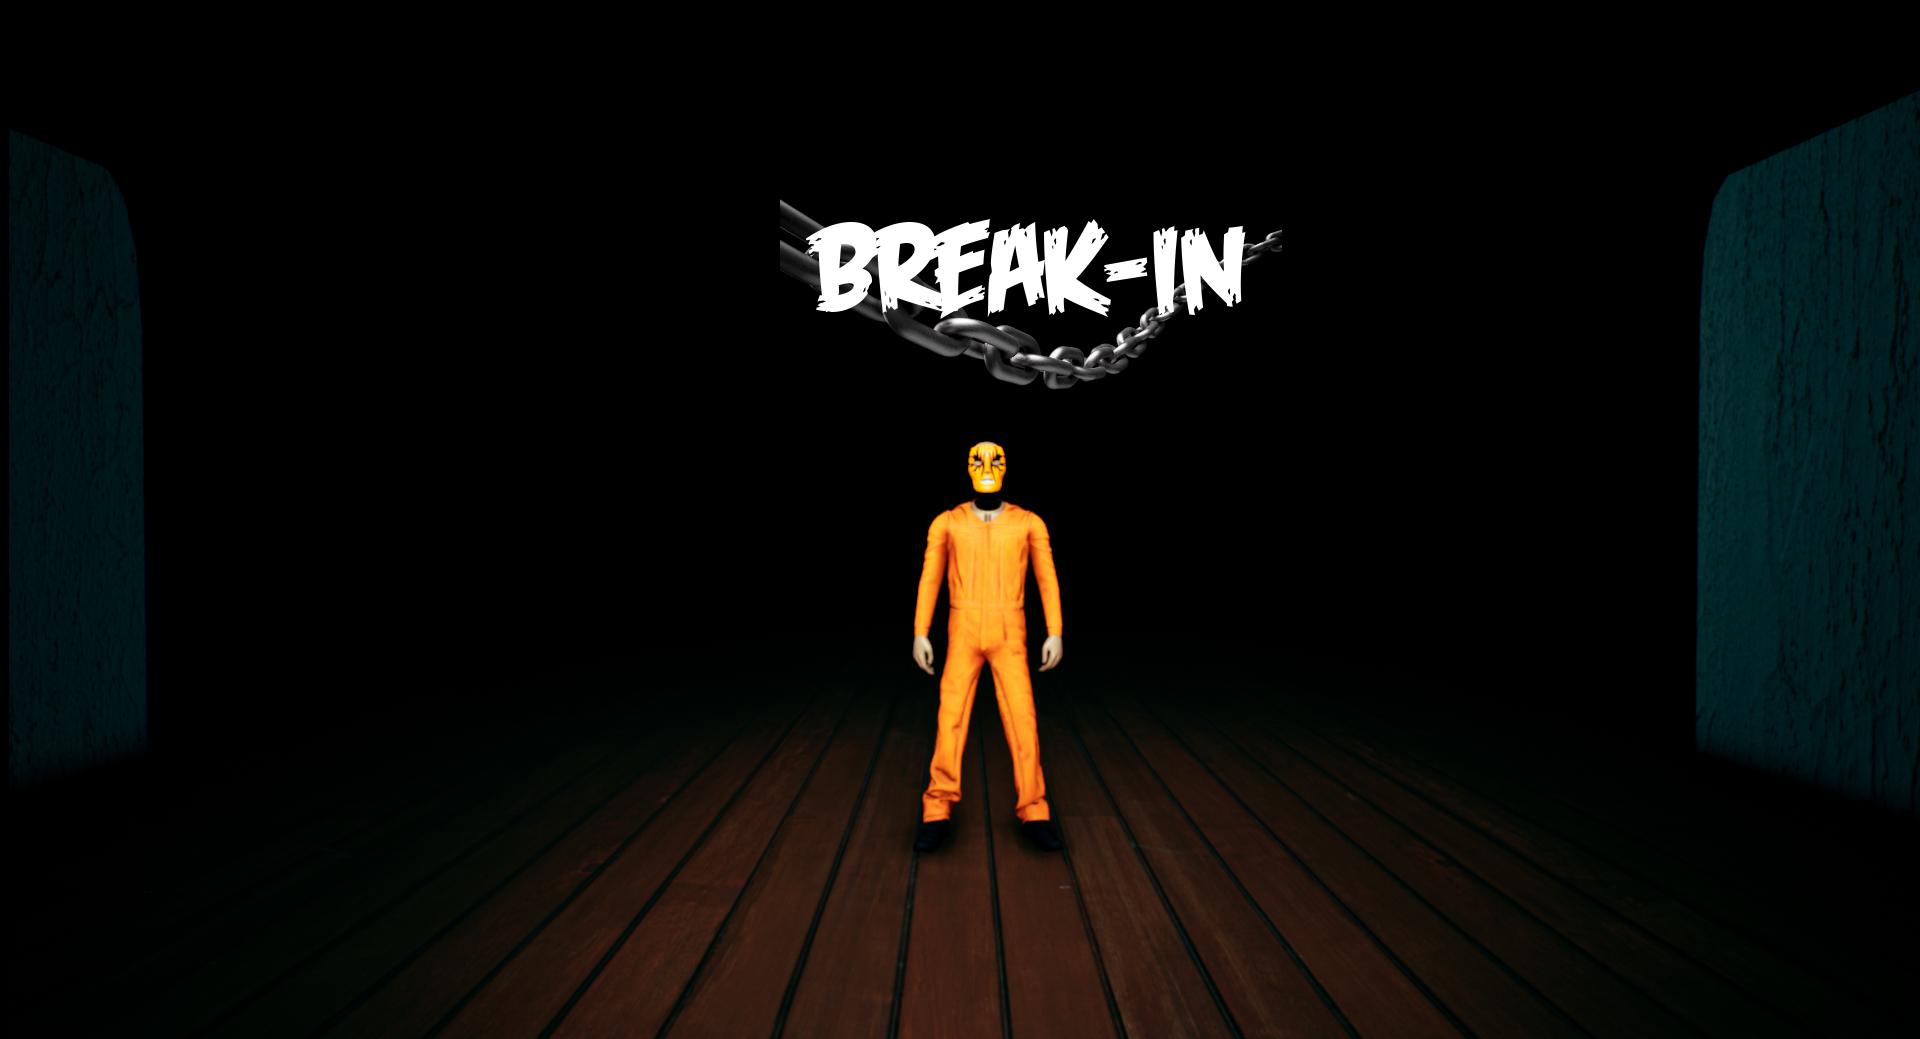 Break-in